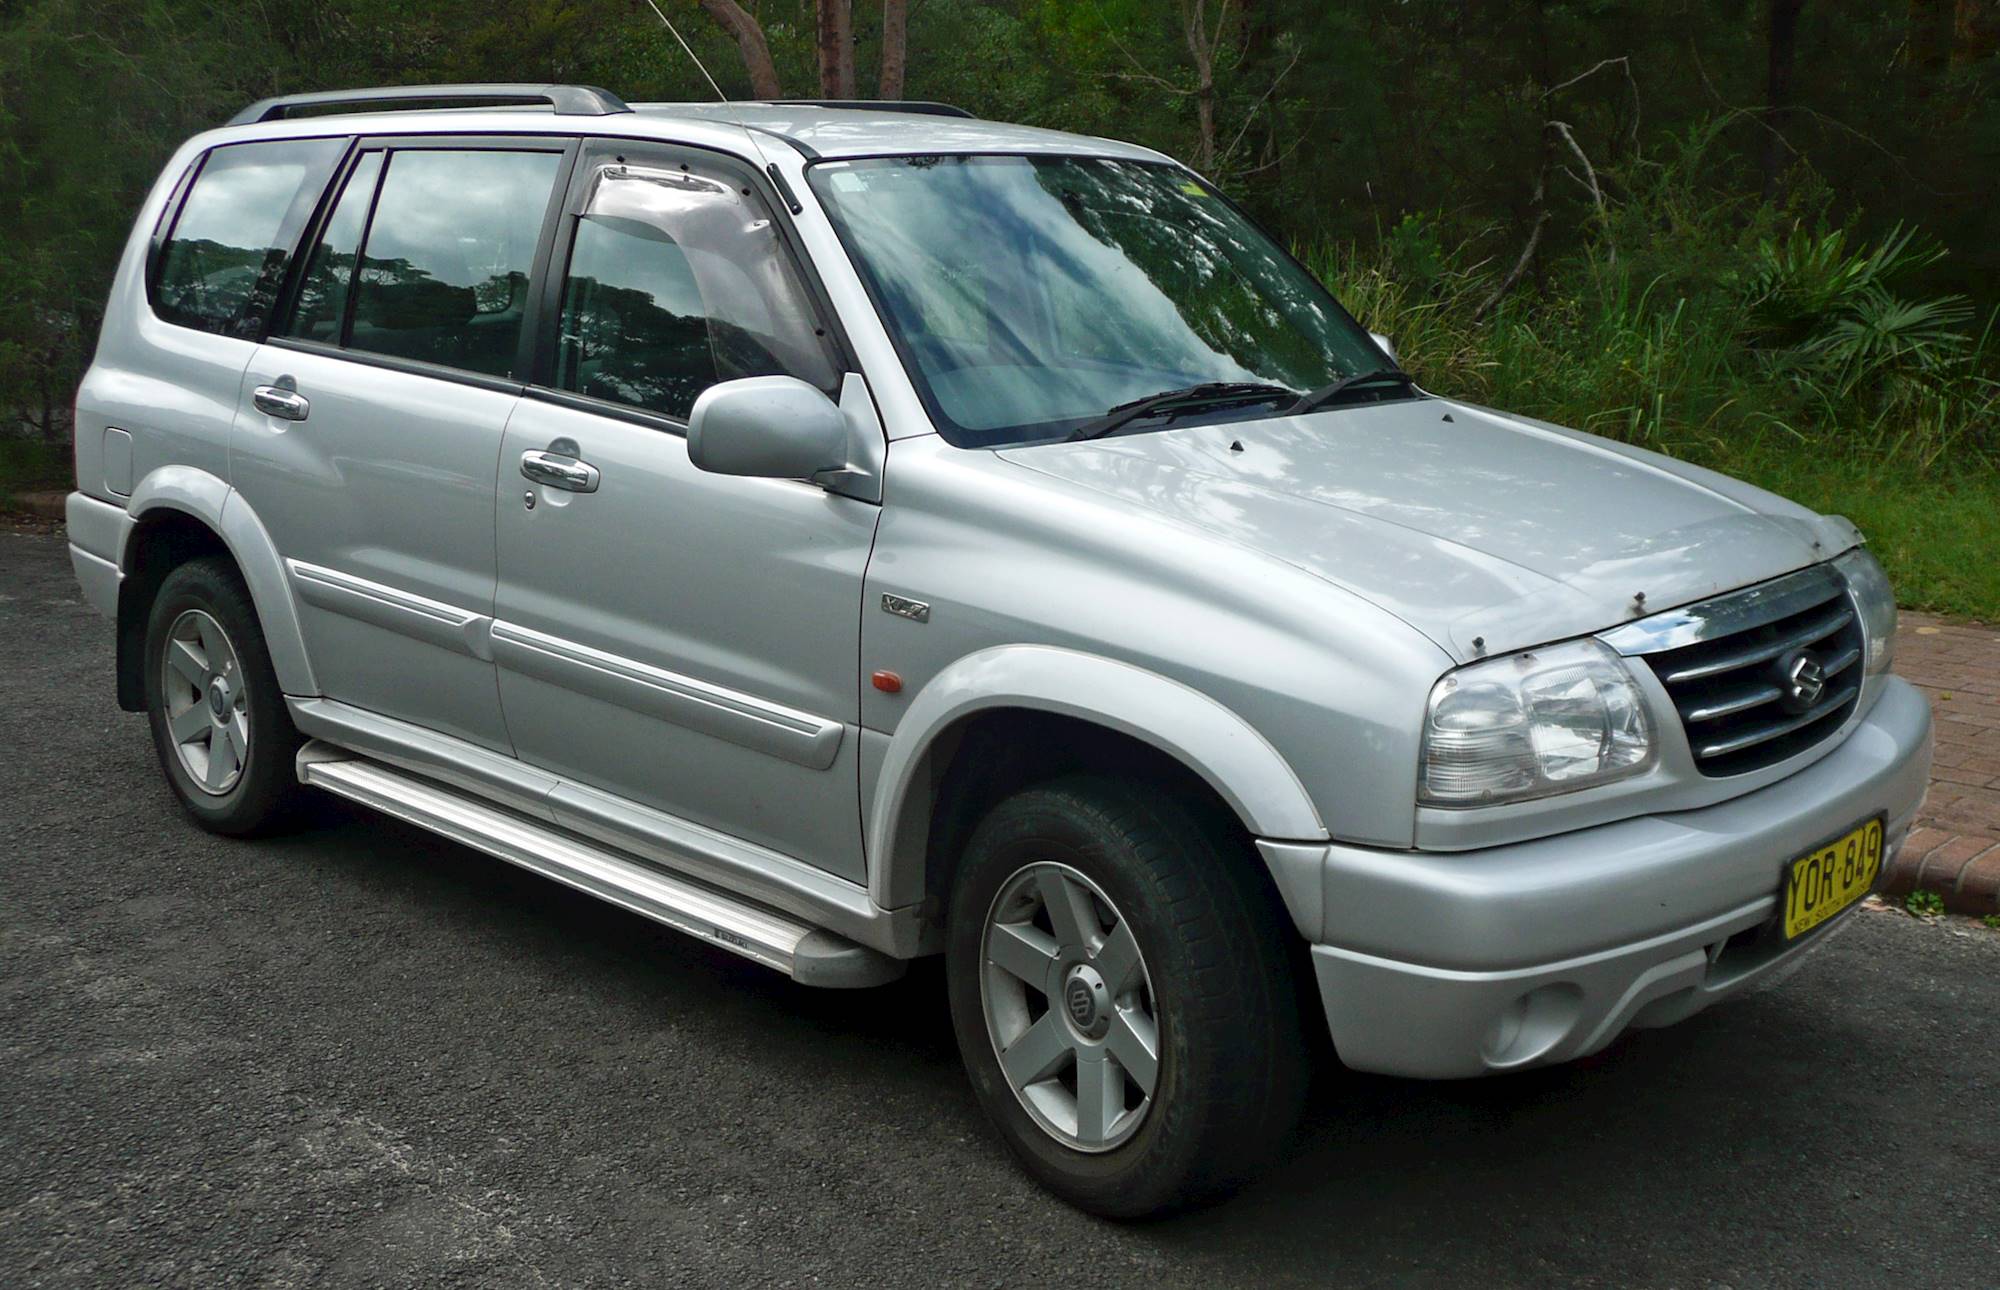 2003 Suzuki Grand Vitara Base - 4dr SUV 2.5L V6 4x4 Manual